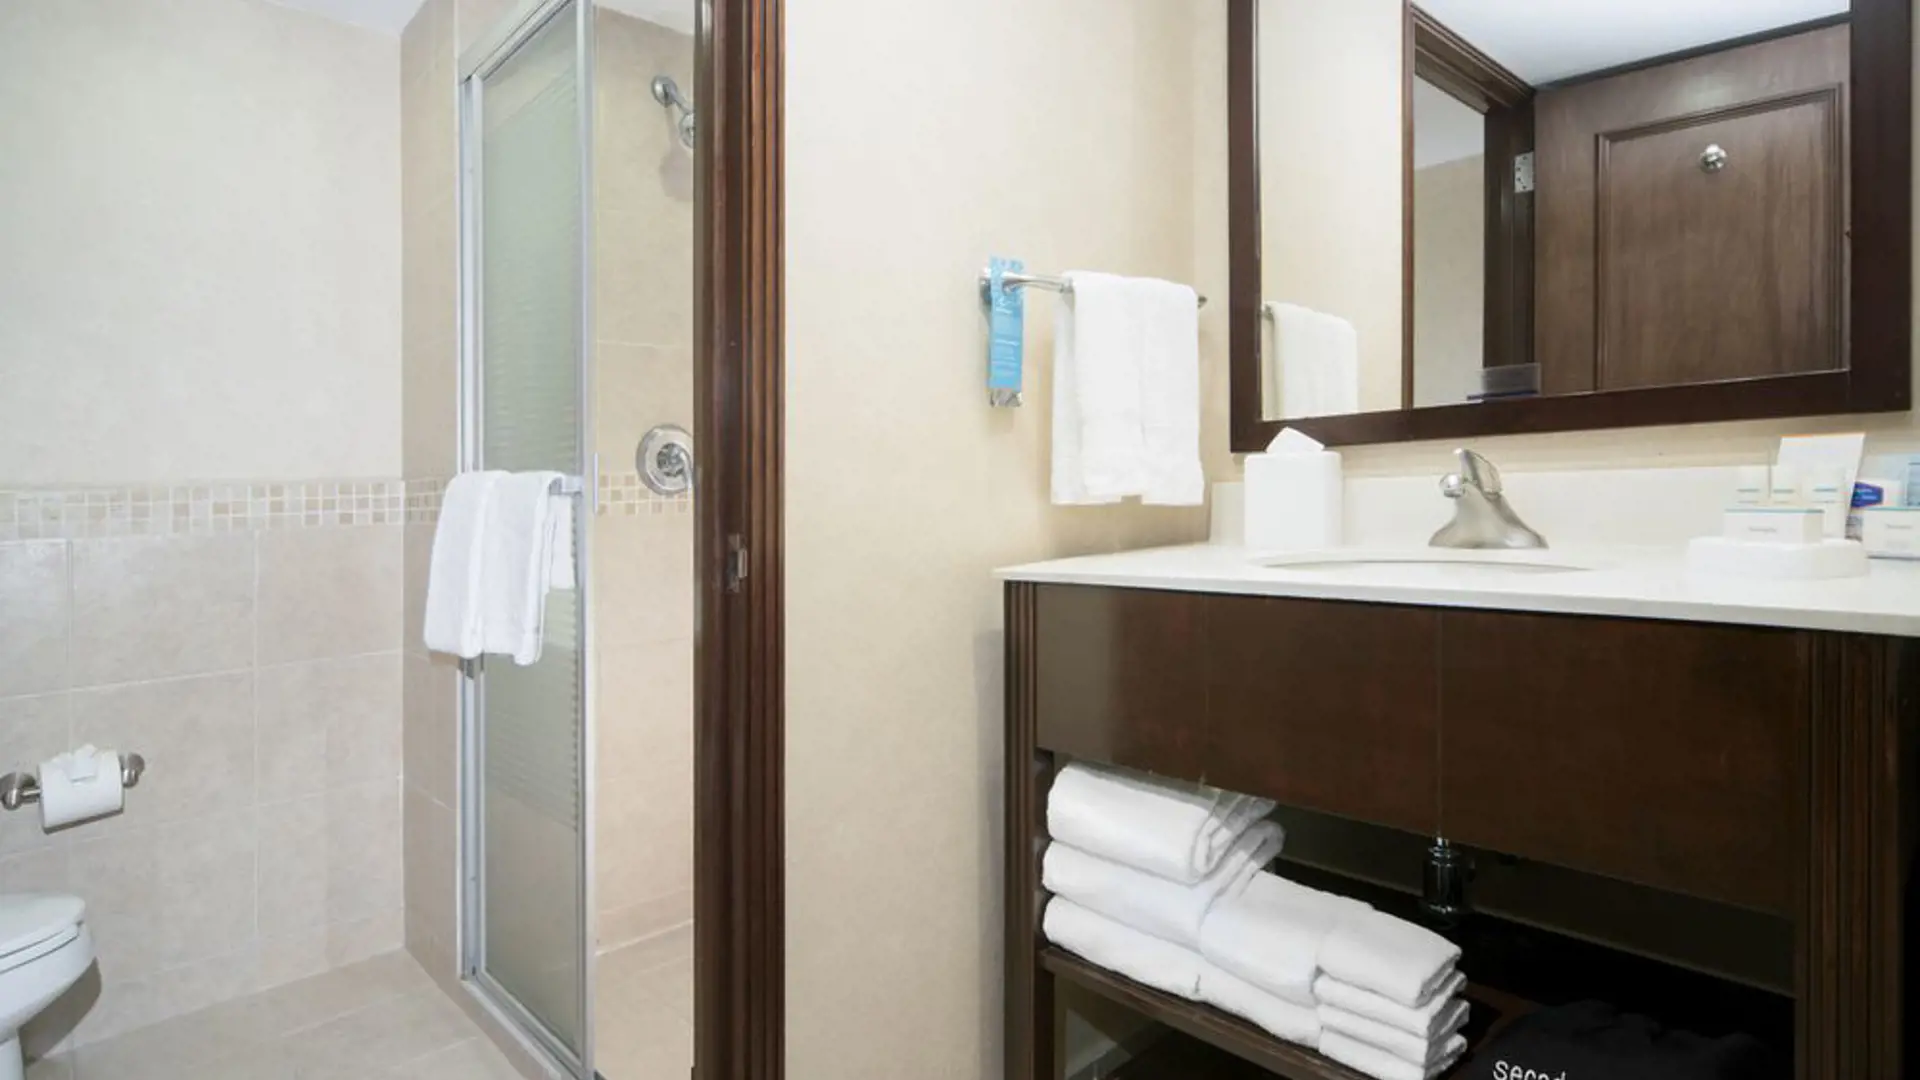 Hamptonn Inn & Suites Mex City - Bathroom.jpg